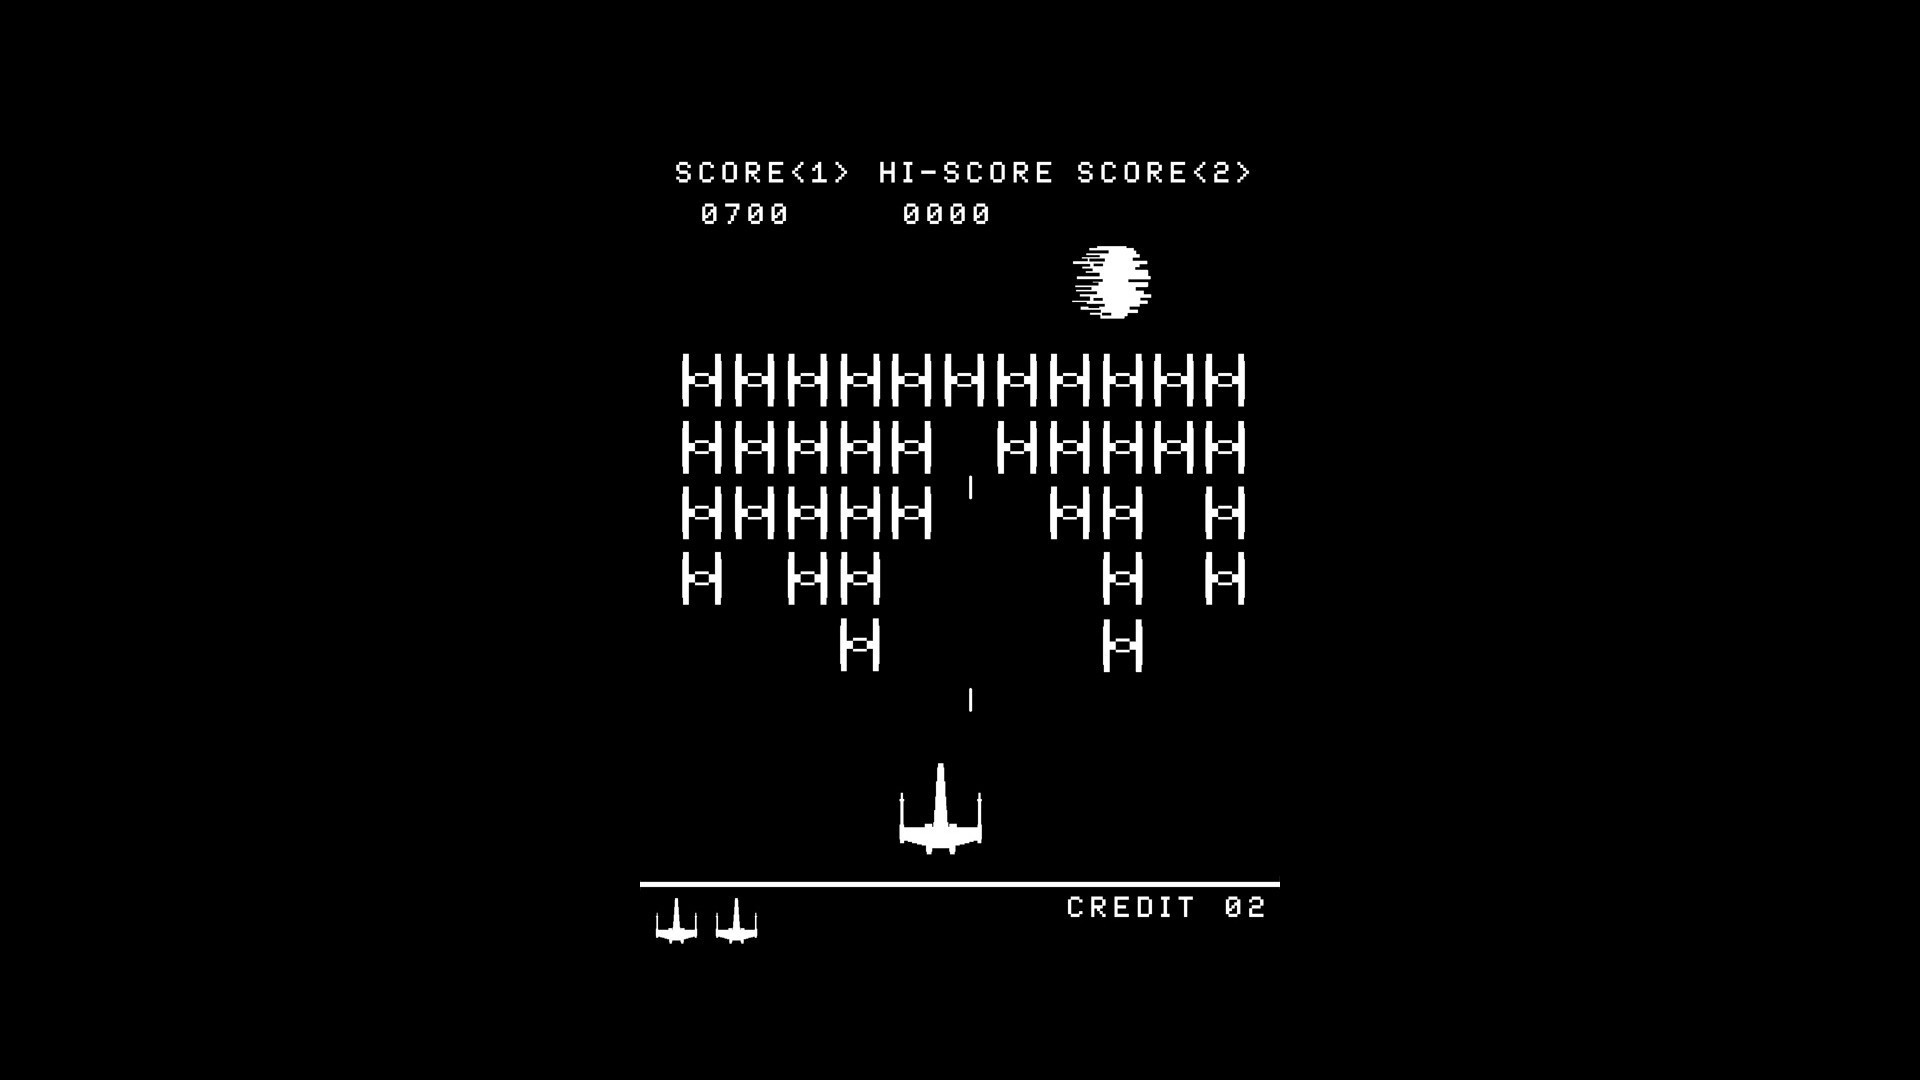 retro Games Black Background Star Wars Space Invaders Death